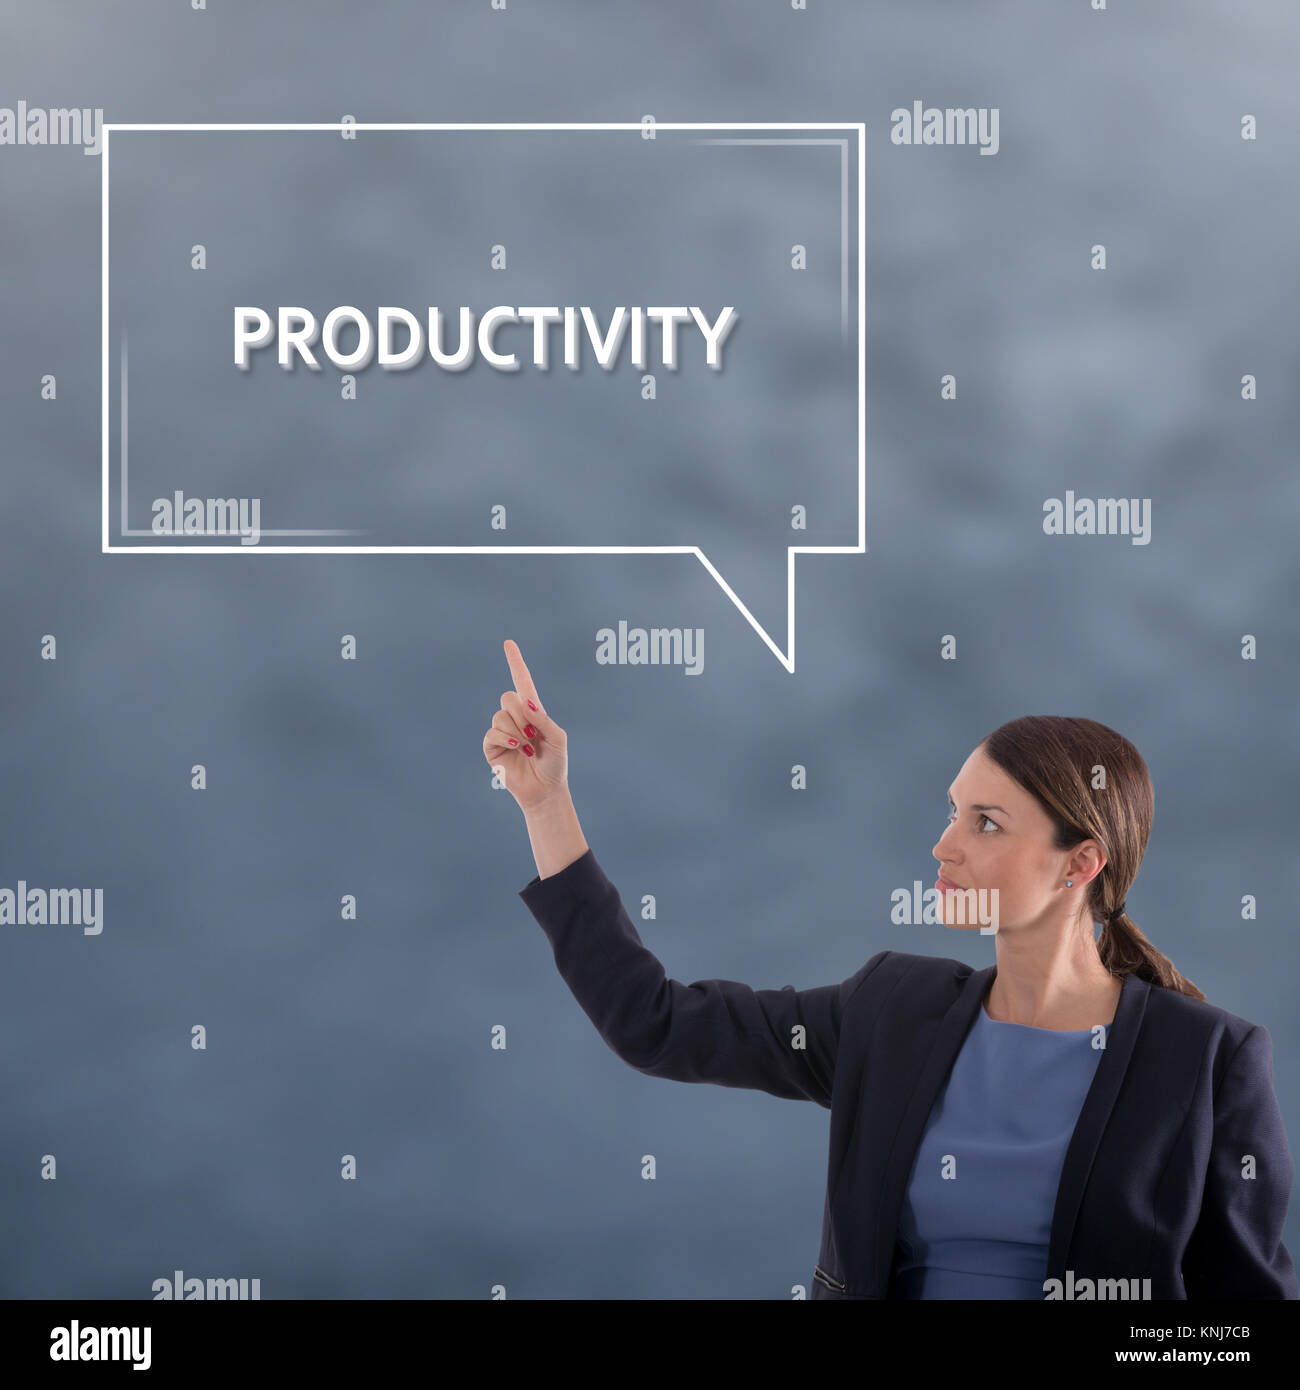 PRODUCTIVITY Business Concept. Business Woman Graphic Concept Stock Photo